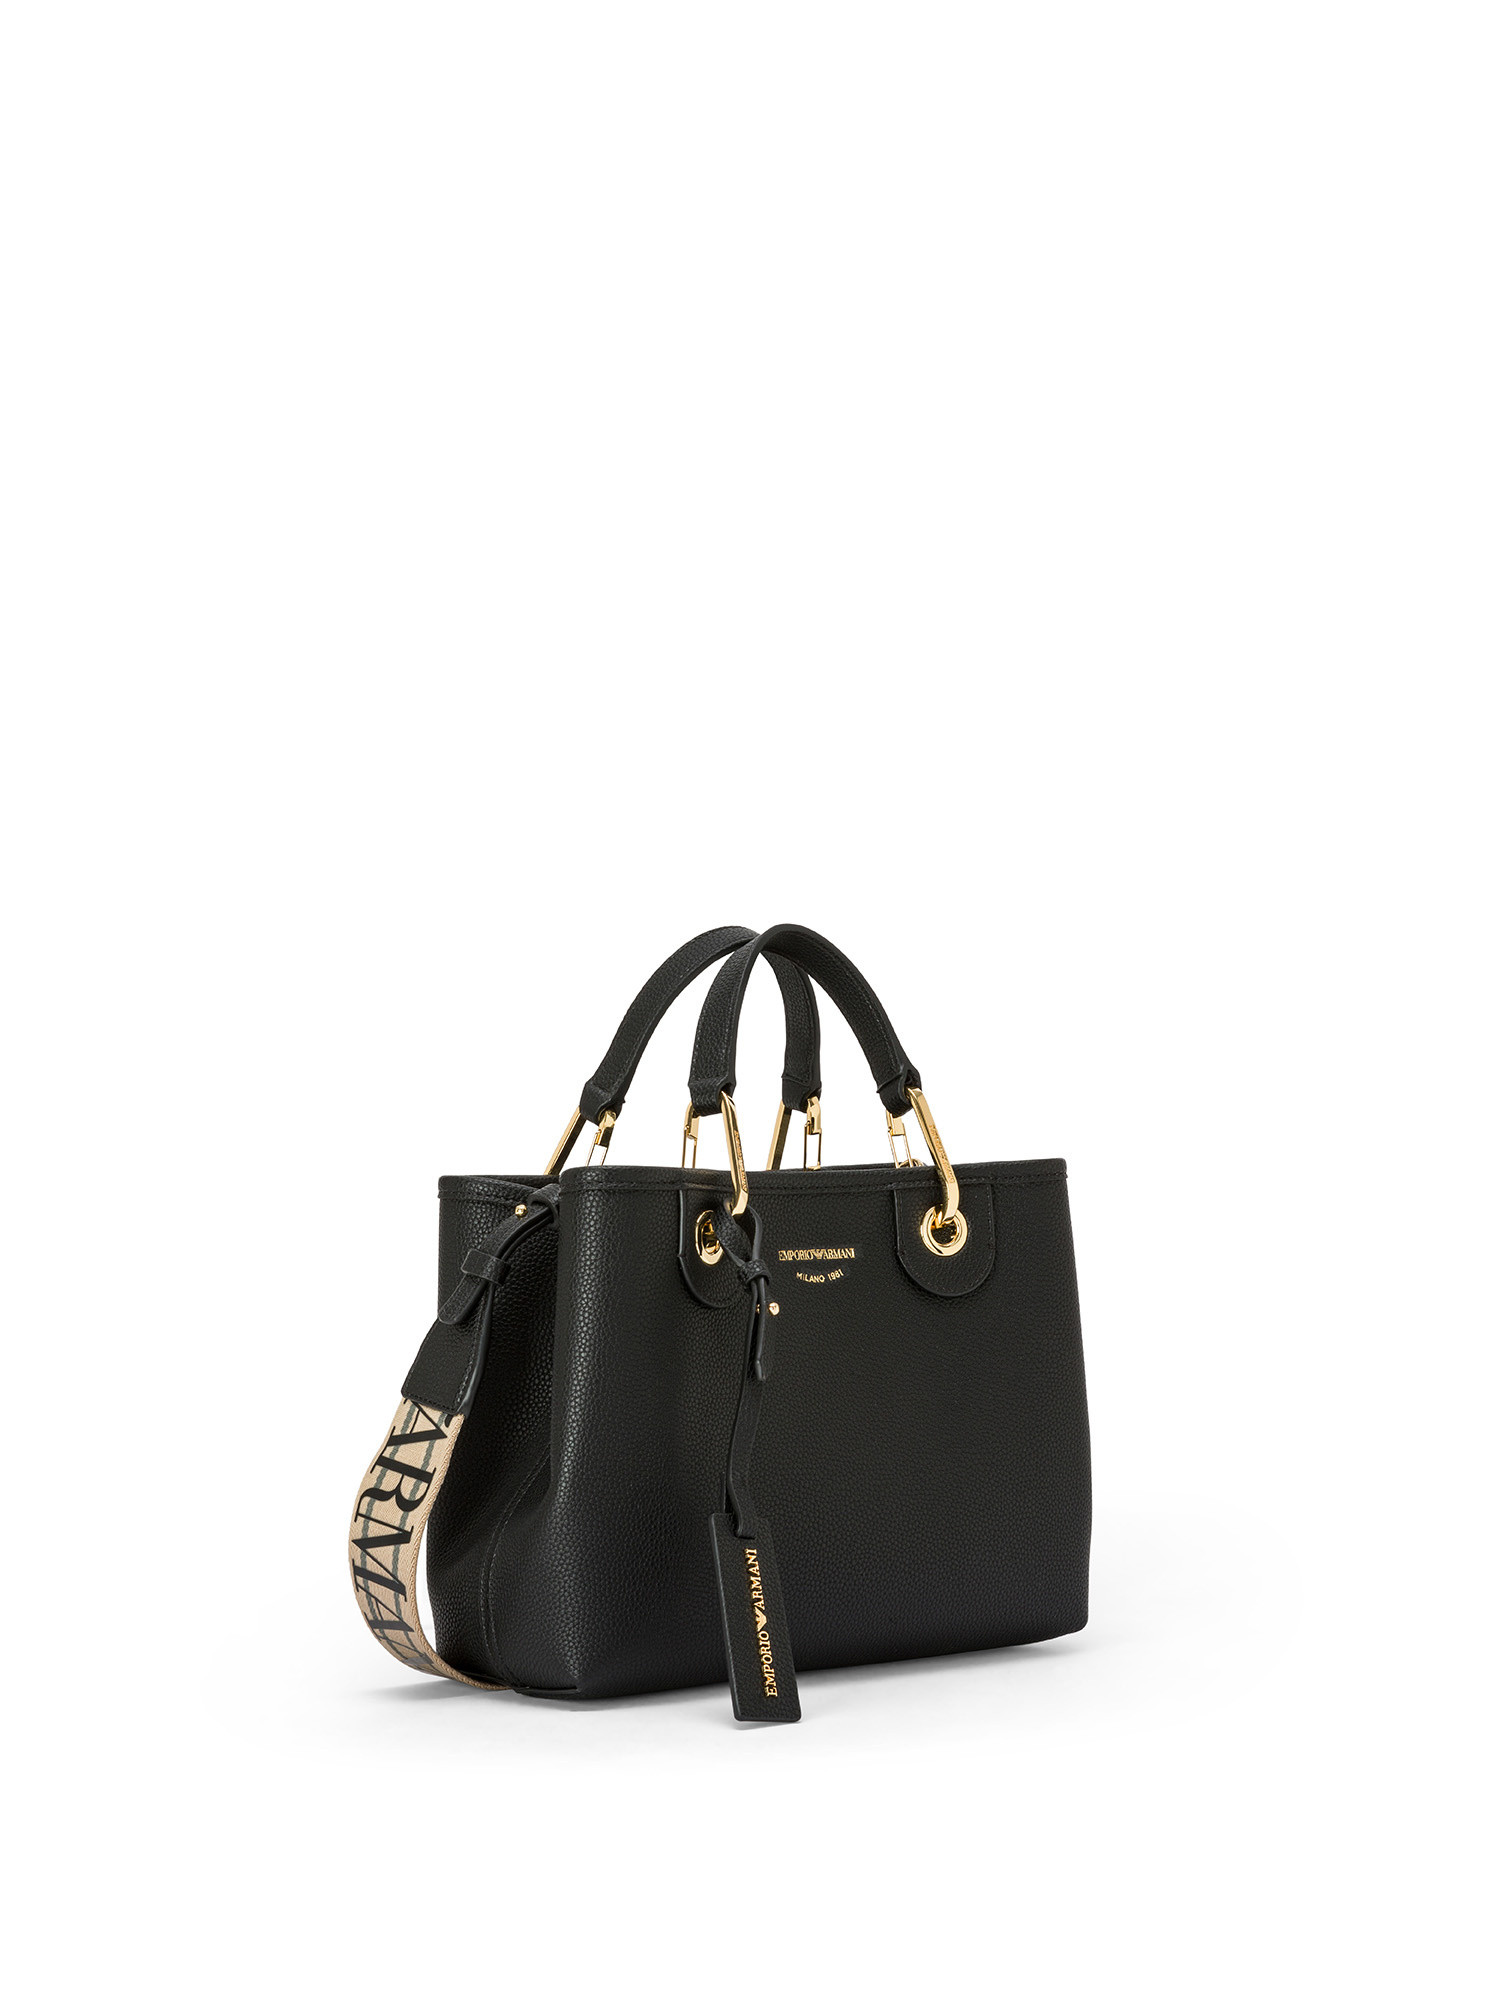 Emporio Armani - Small handbag with deer print, Black, large image number 1